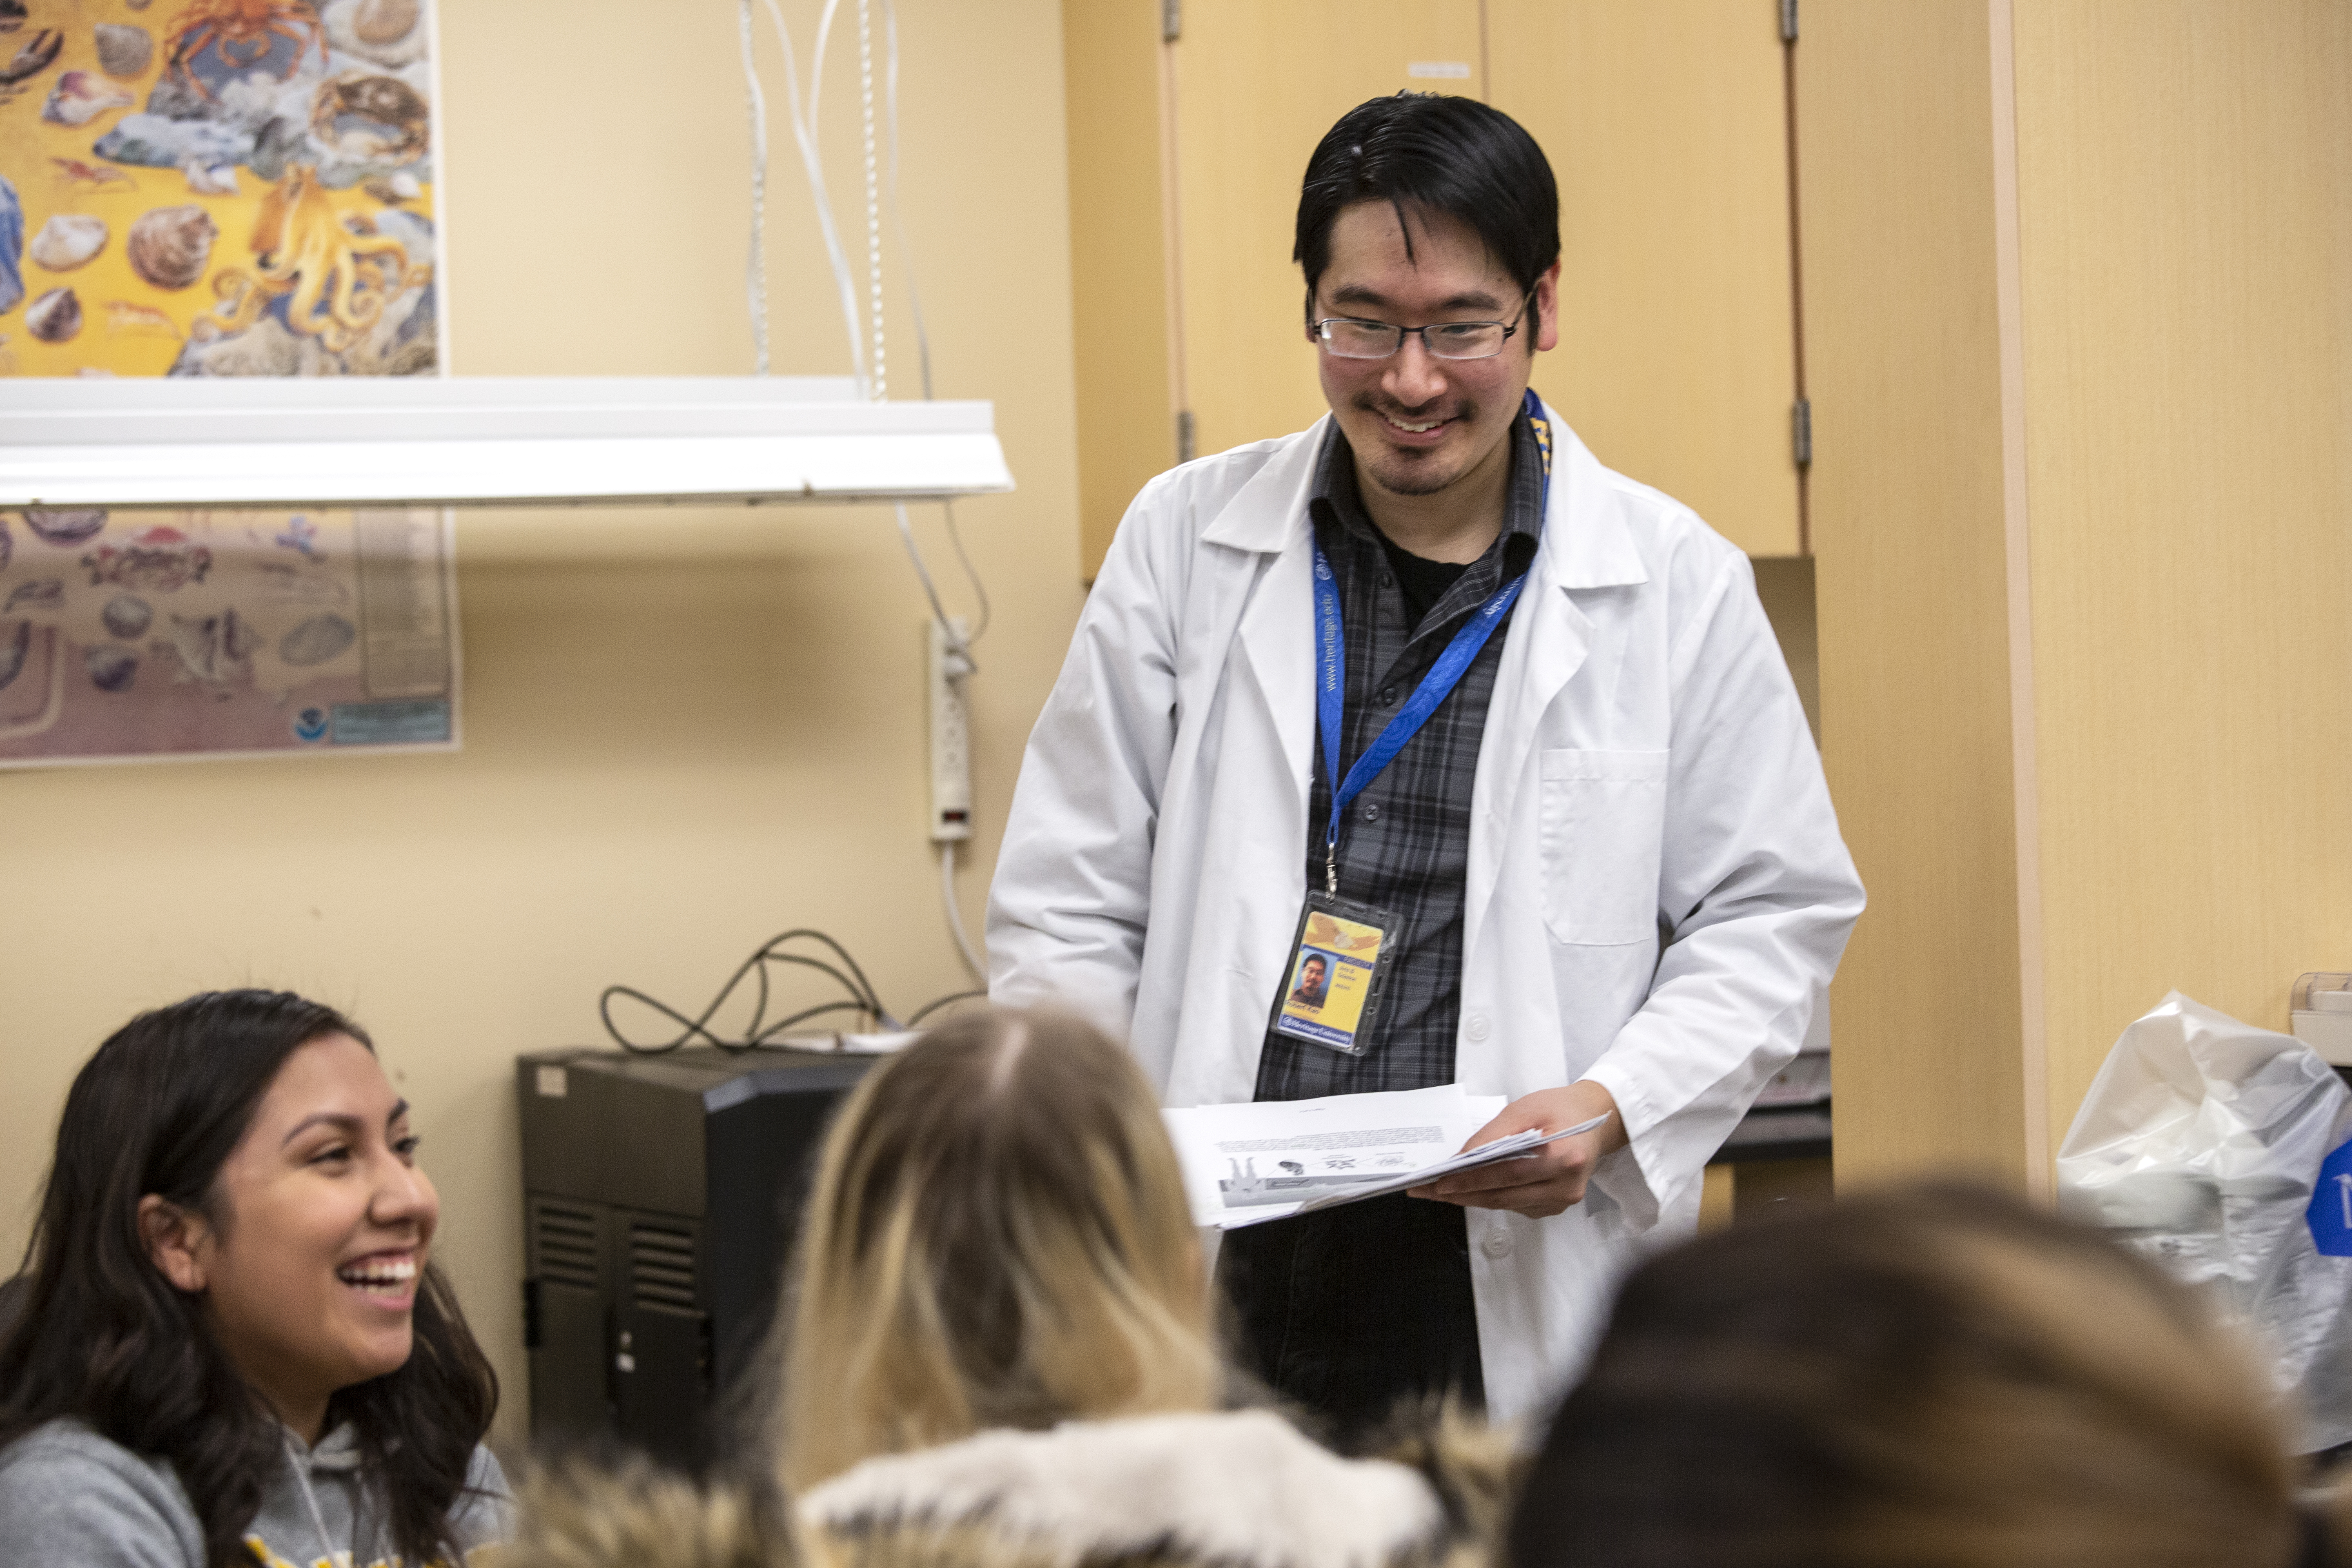 Dr. Robert Kao teaches biology Jan. 22, 2019 at Heritage University in Toppenish, Wash. (GORDON KING/Gordon King Photography)